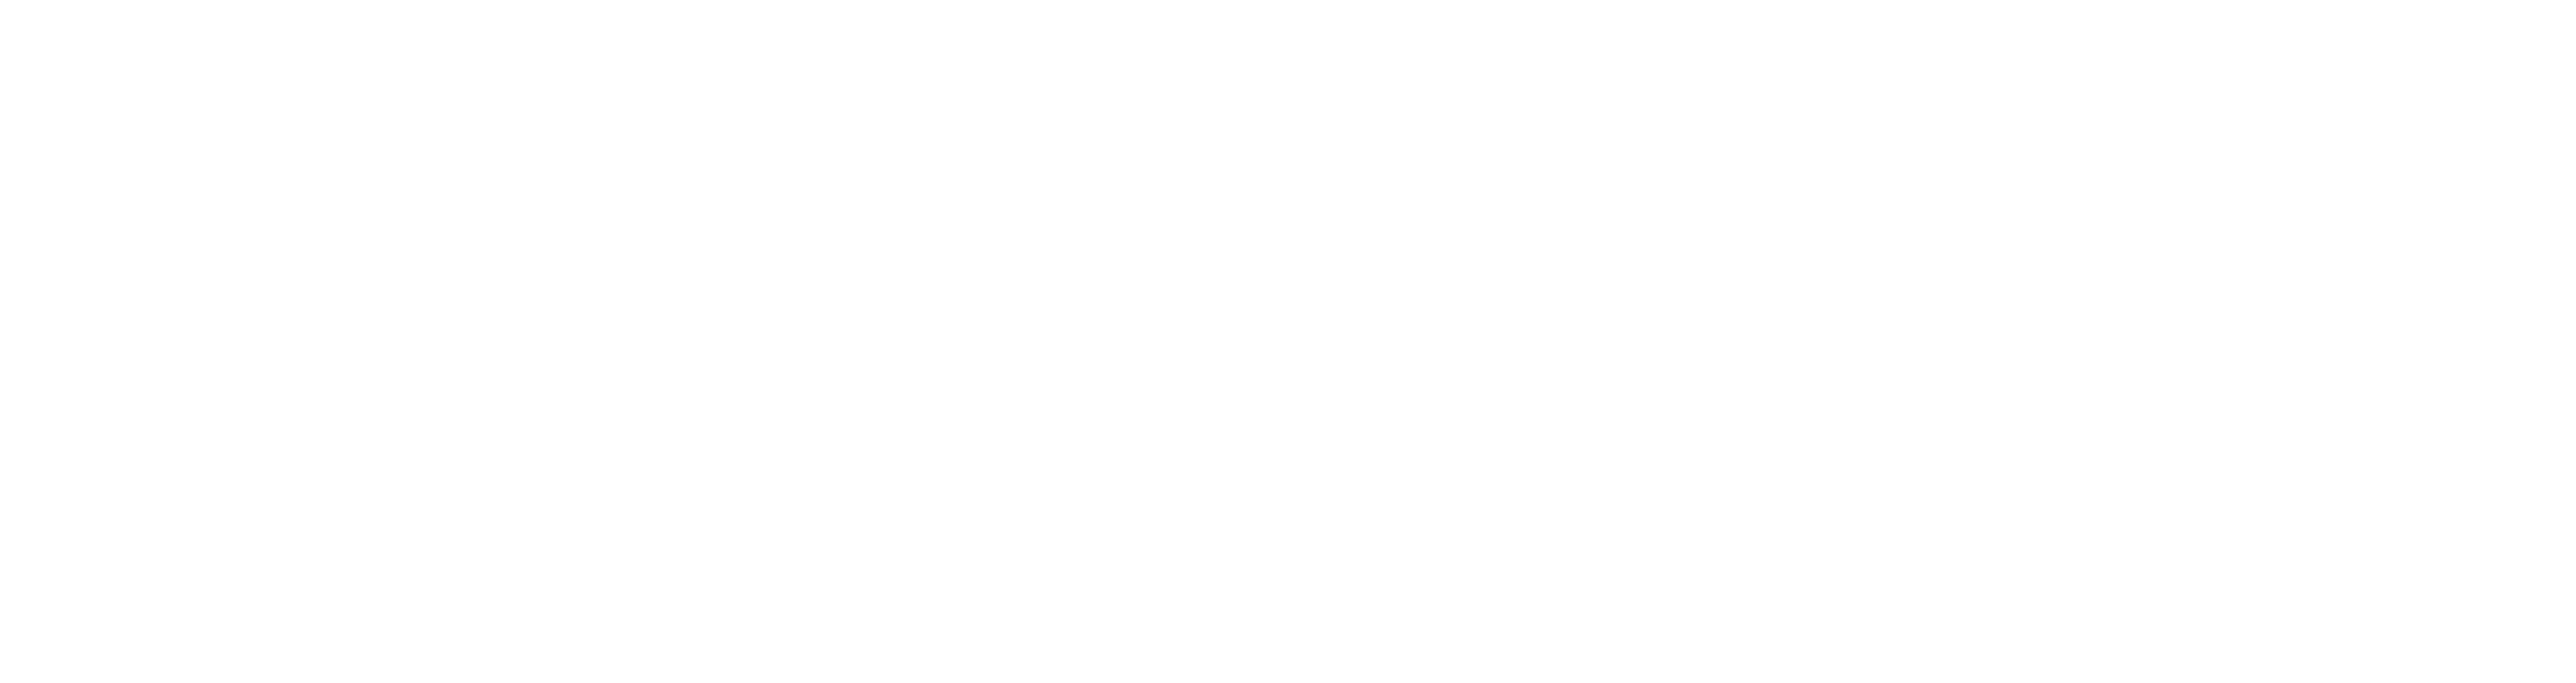 fundacja share the care logo